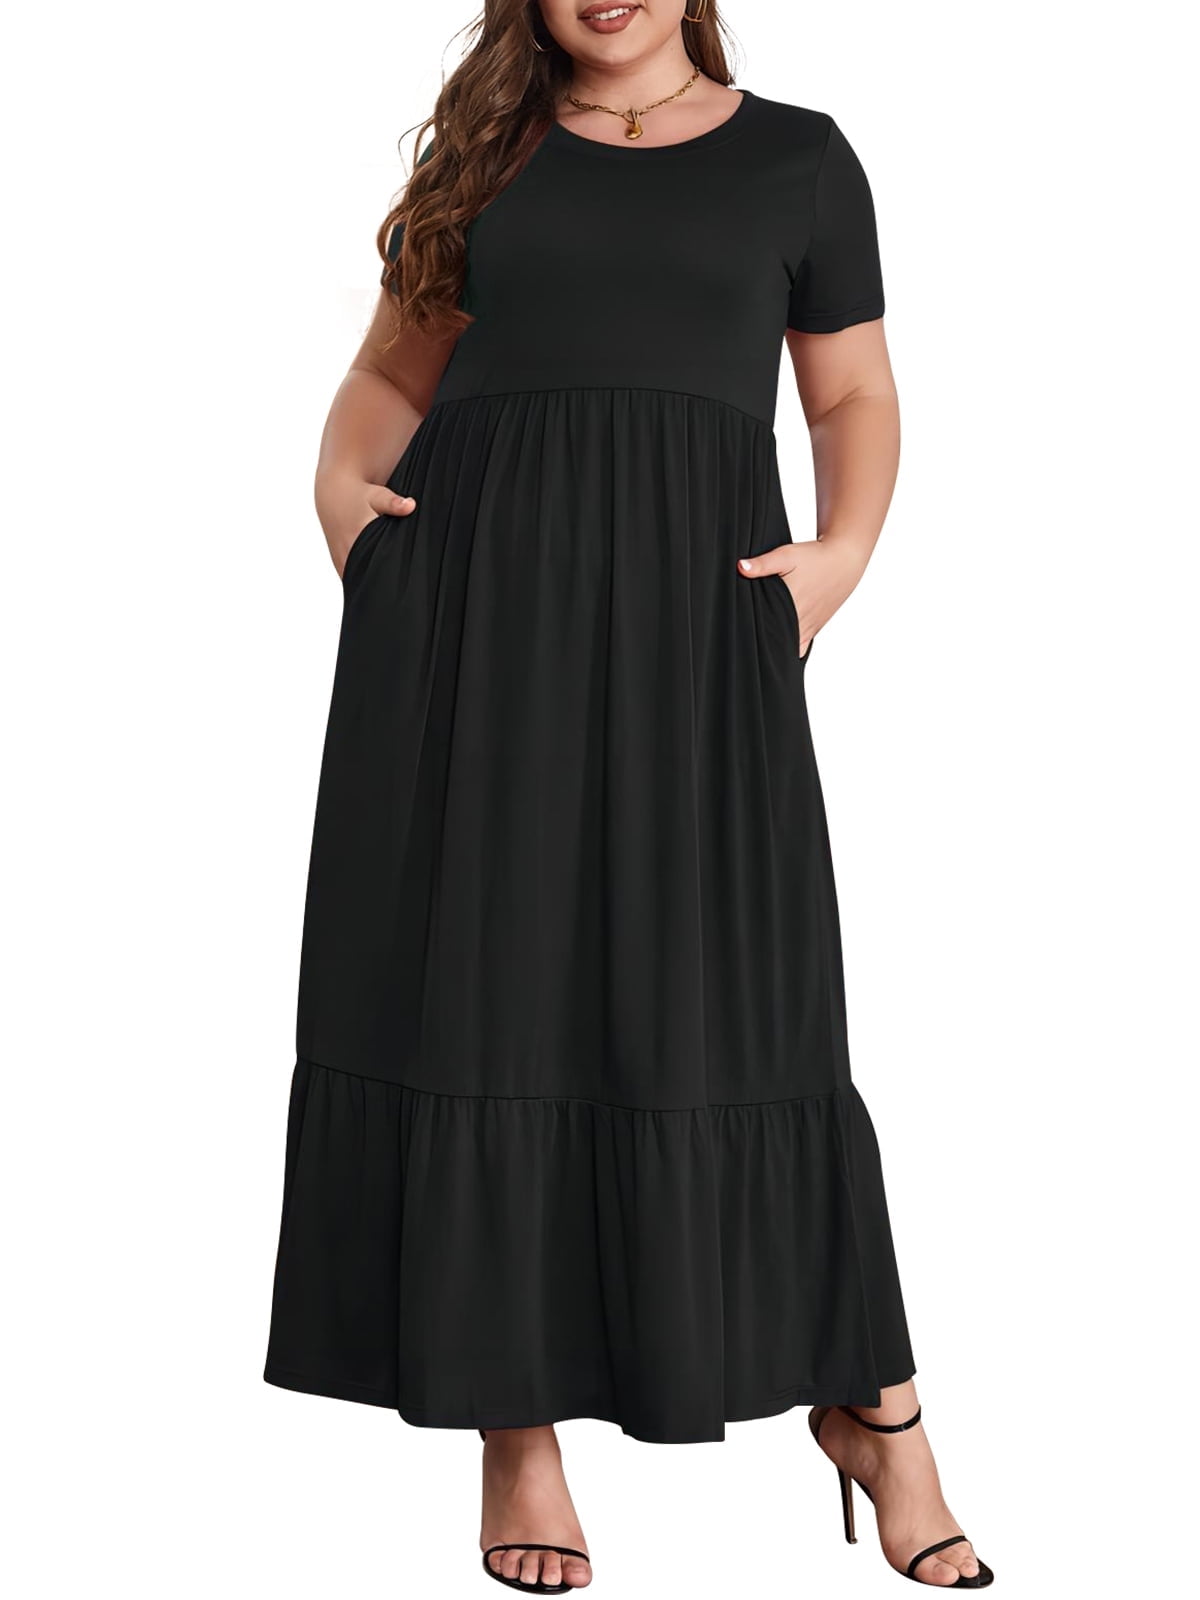 Mengpipi Women s Plus Size Casual Short Sleeve Crewneck Dress Flowy Tiered Loose Maxi Dress with Pockets Black 1X 5X ad476e5e 8998 4977 915d 6b1f924cd8a4.9e136d63168aabc8f92ed87071c28ebb